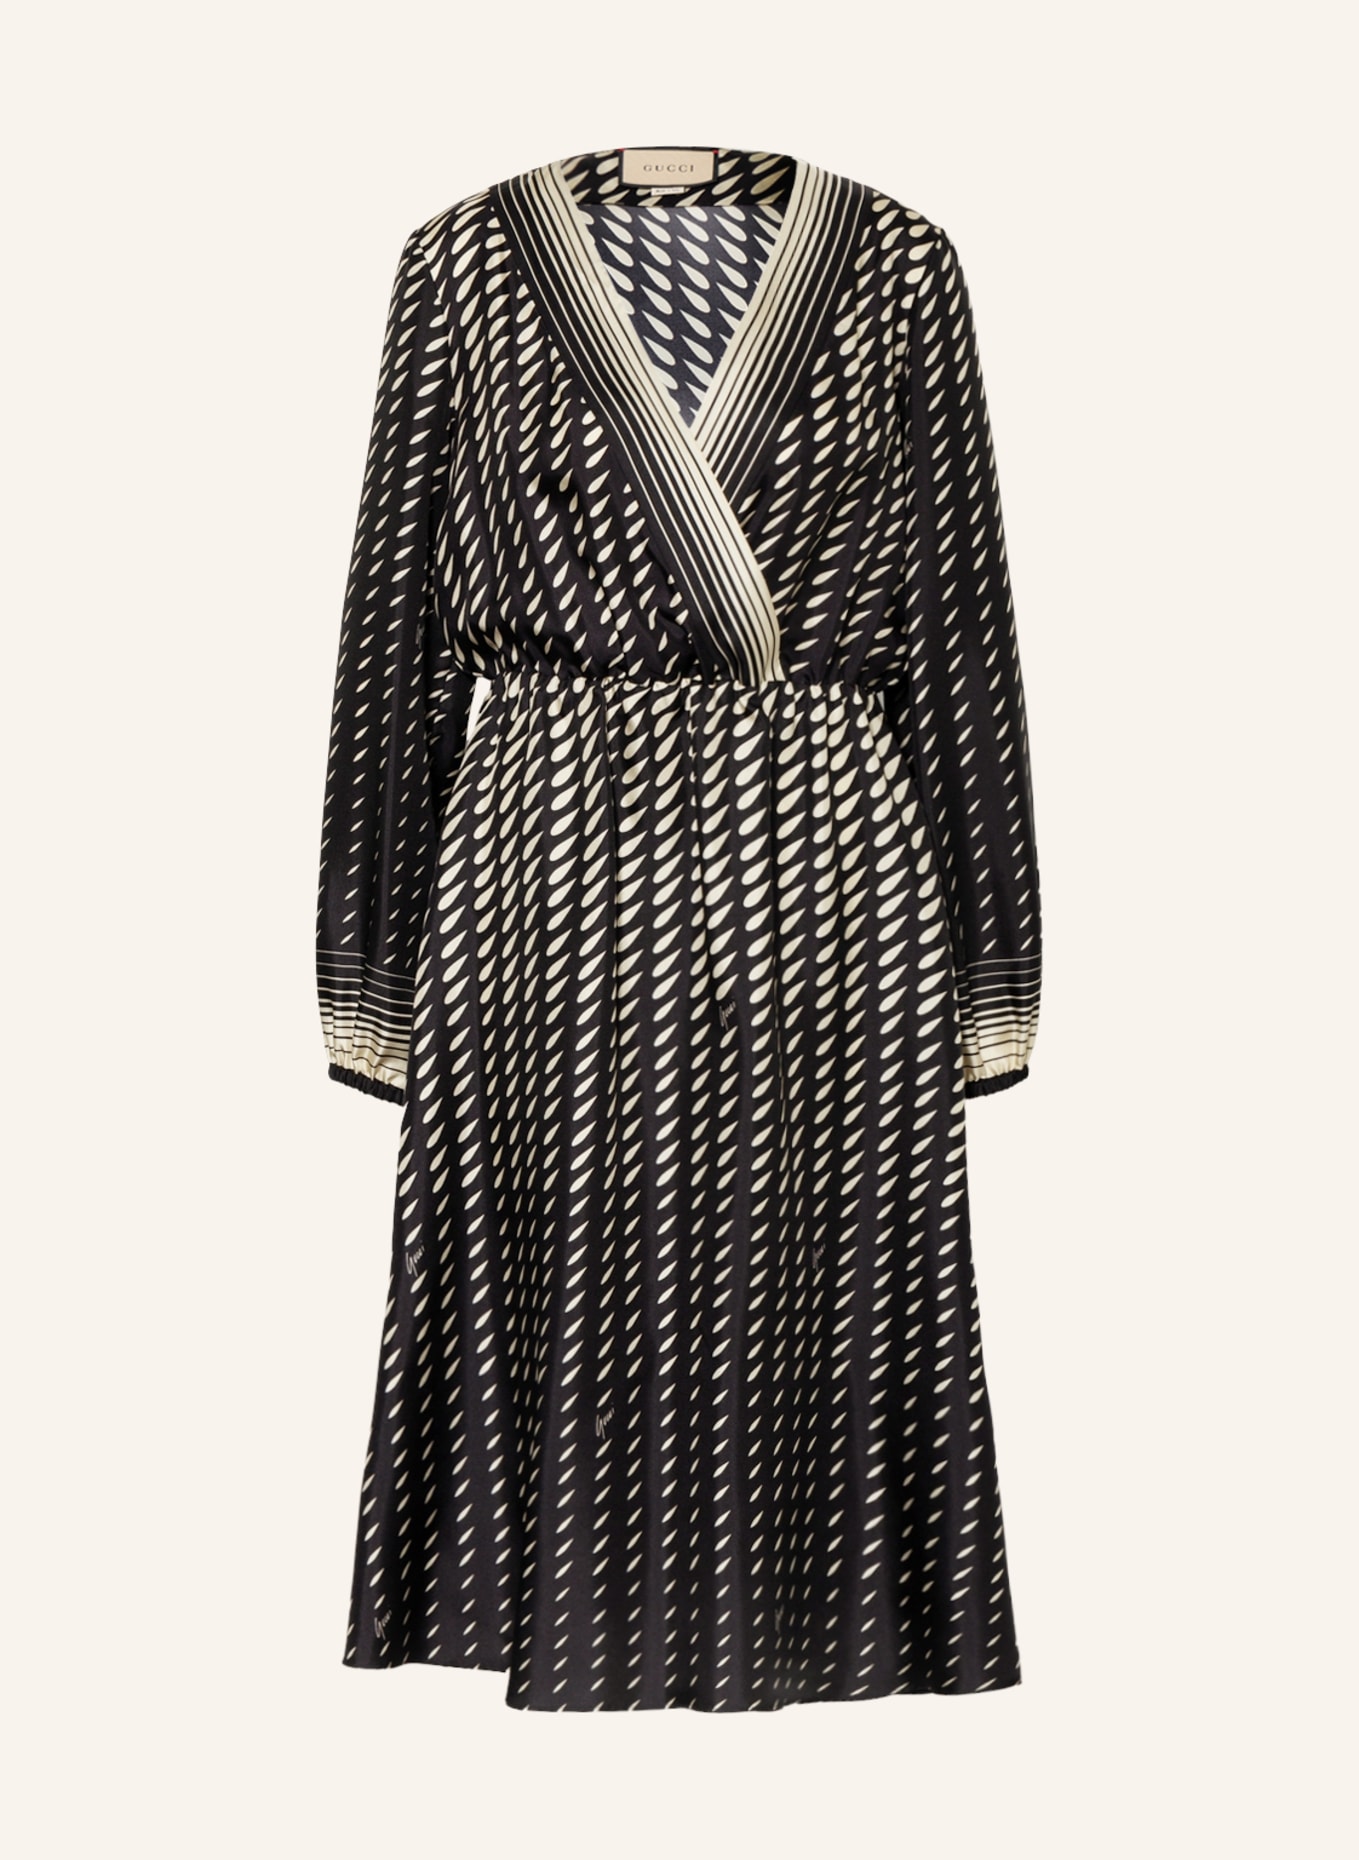 Chiara Ferragni Stays Simple In a Tom Ford-era Gucci Dress